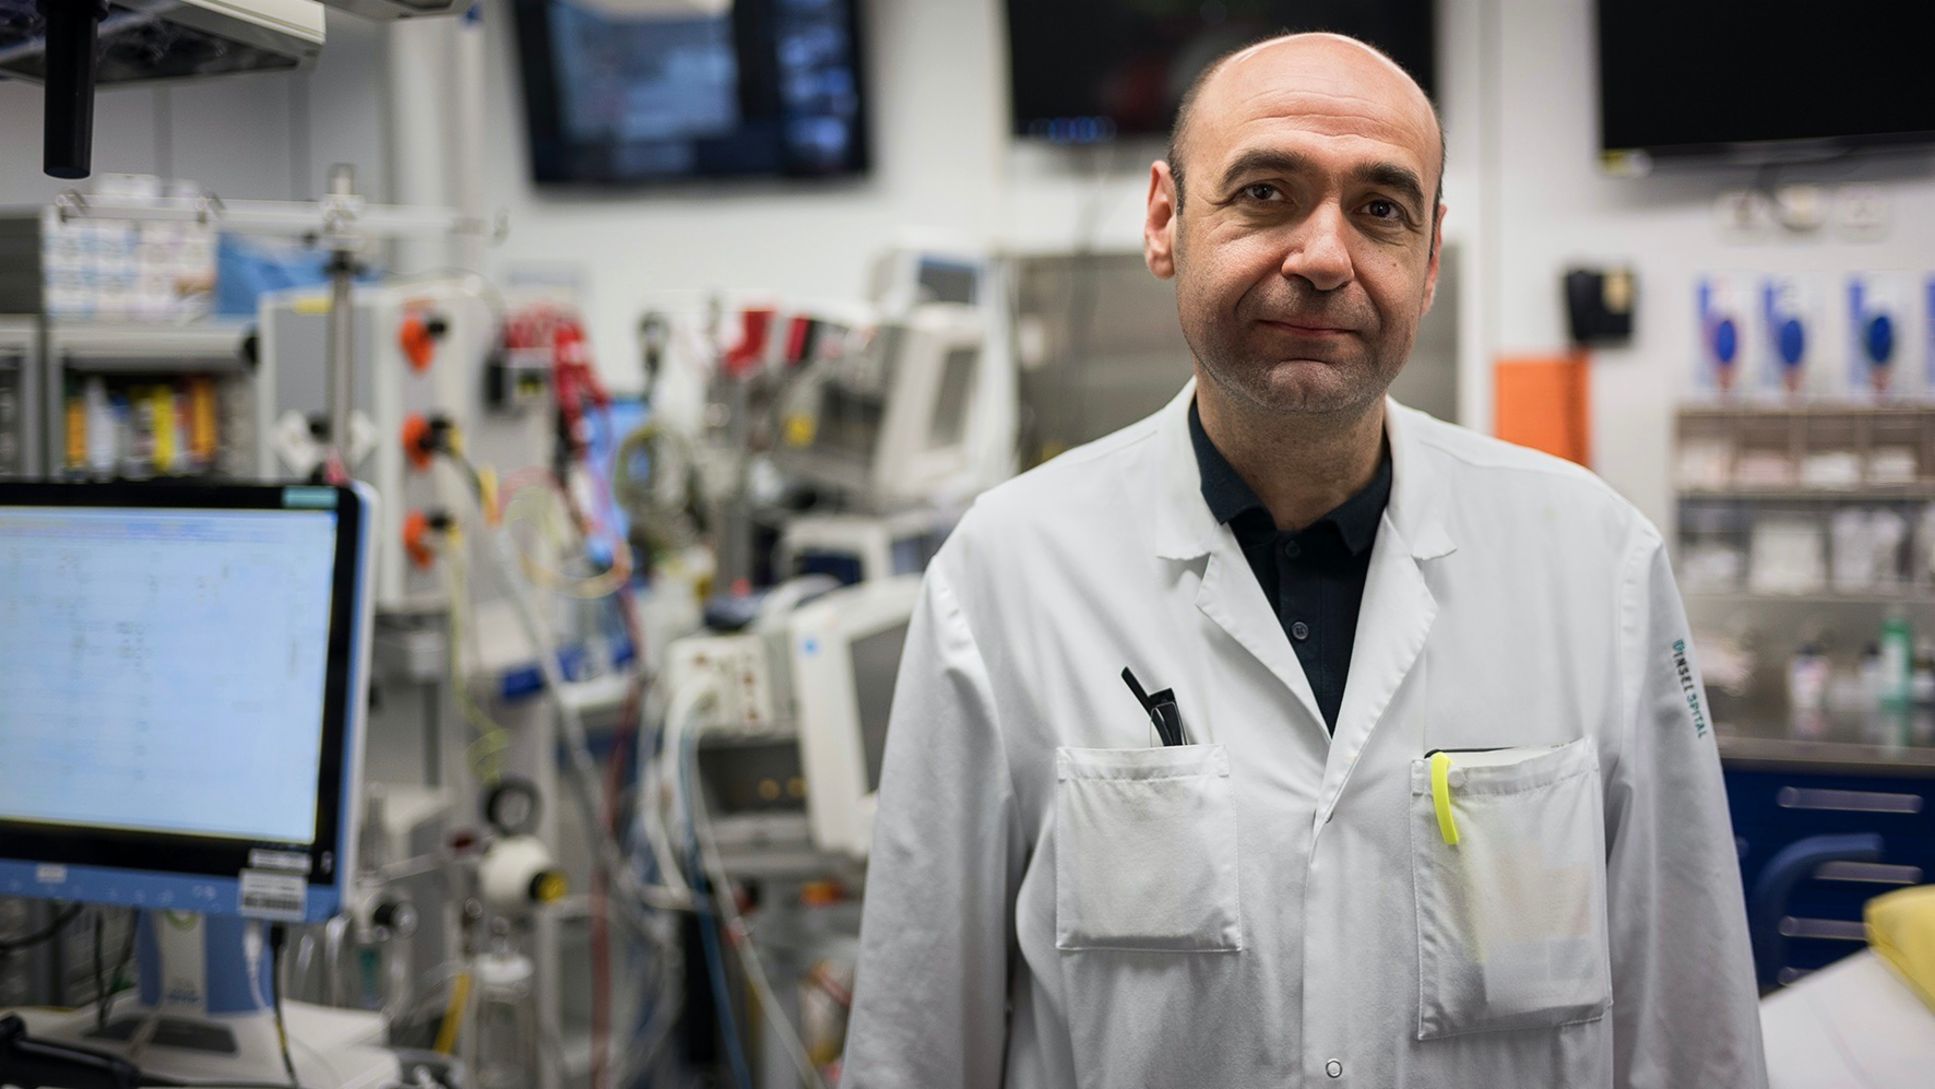 Professor Aristomenis Exadaktylos, director of the department of emergency medicine at Bern University Hospital, 2020, Porsche AG